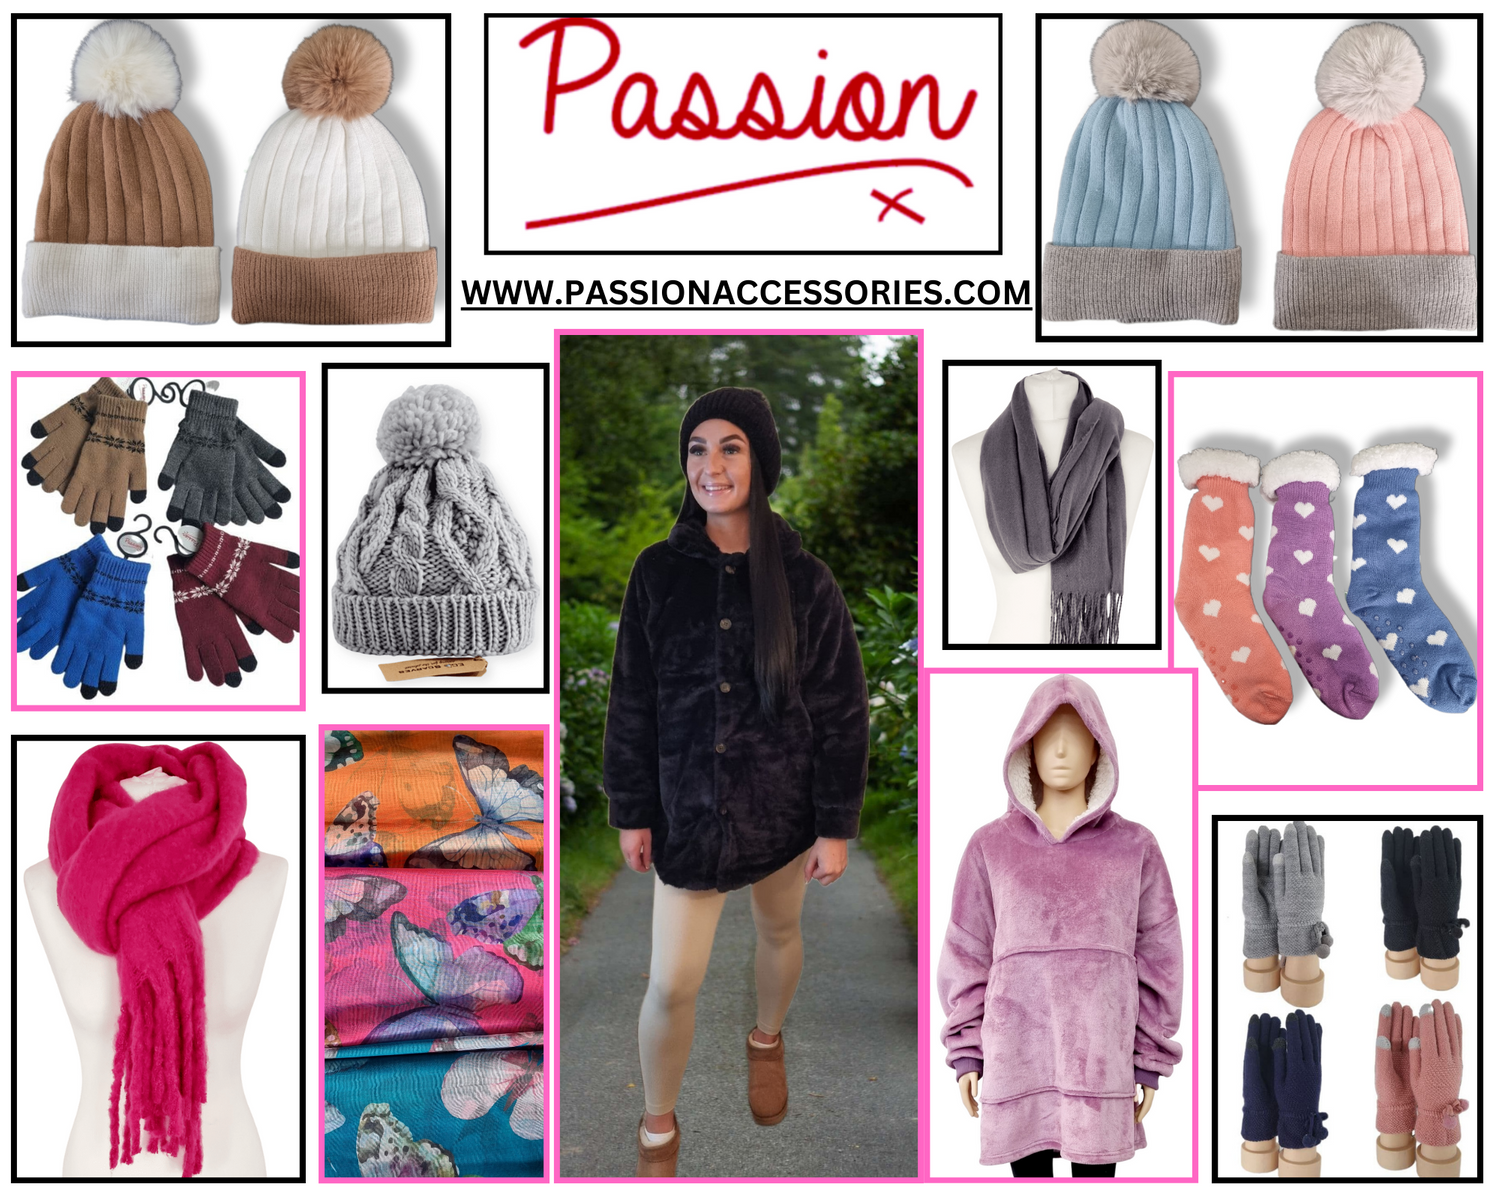 Passion Accessories Ltd